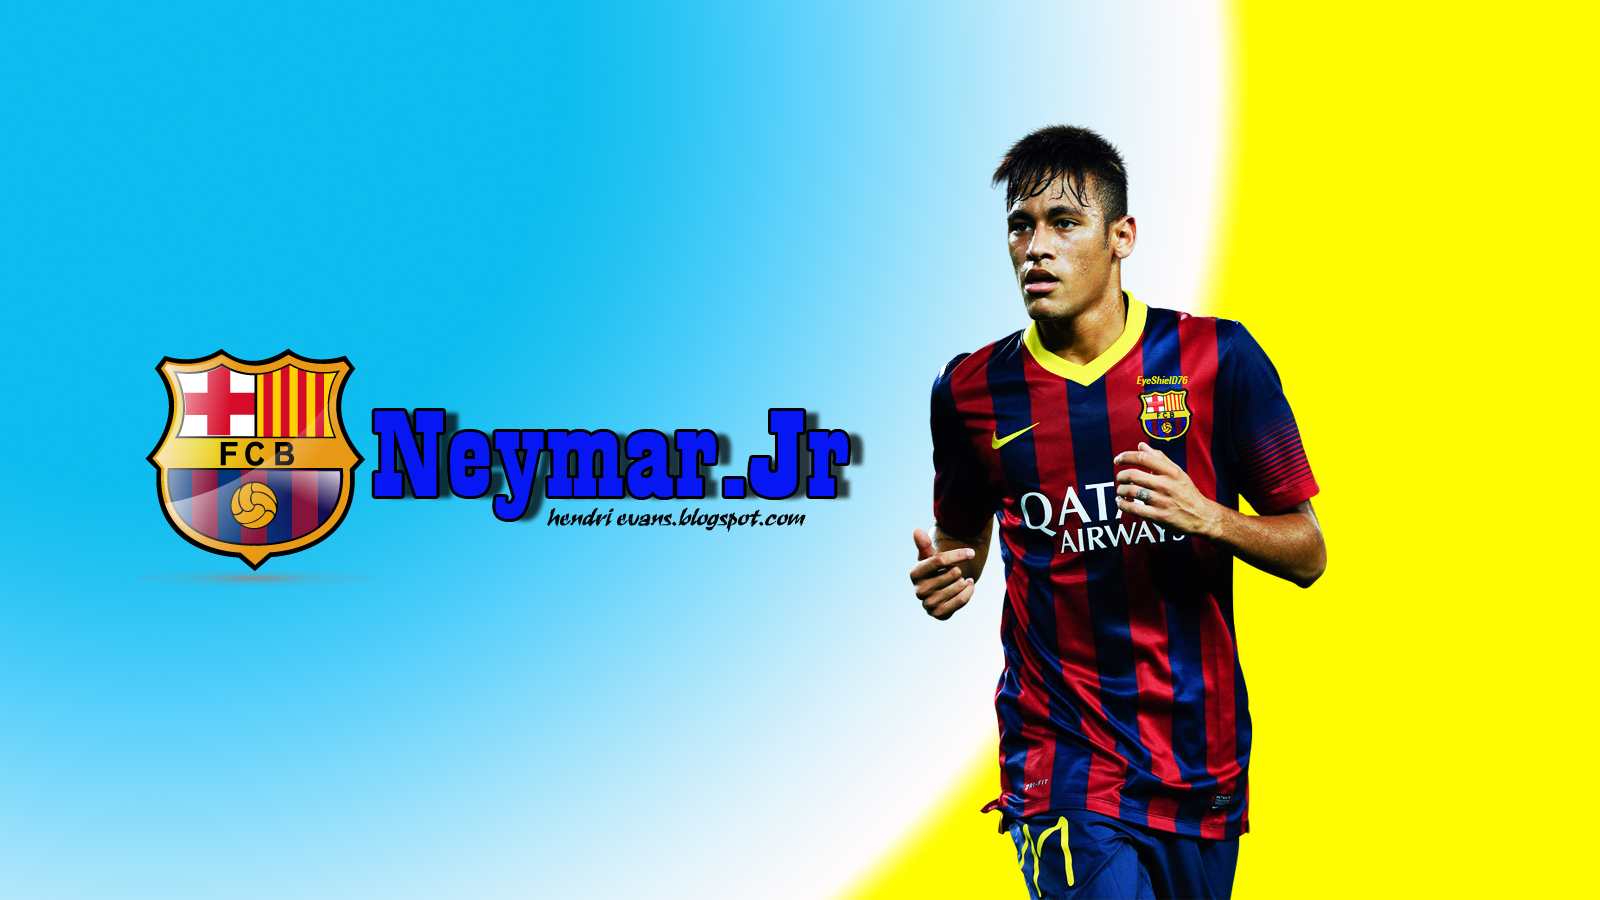 fondos de pantalla neymar jr terbaru,jugador de fútbol,producto,jugador,jugador de fútbol,equipo